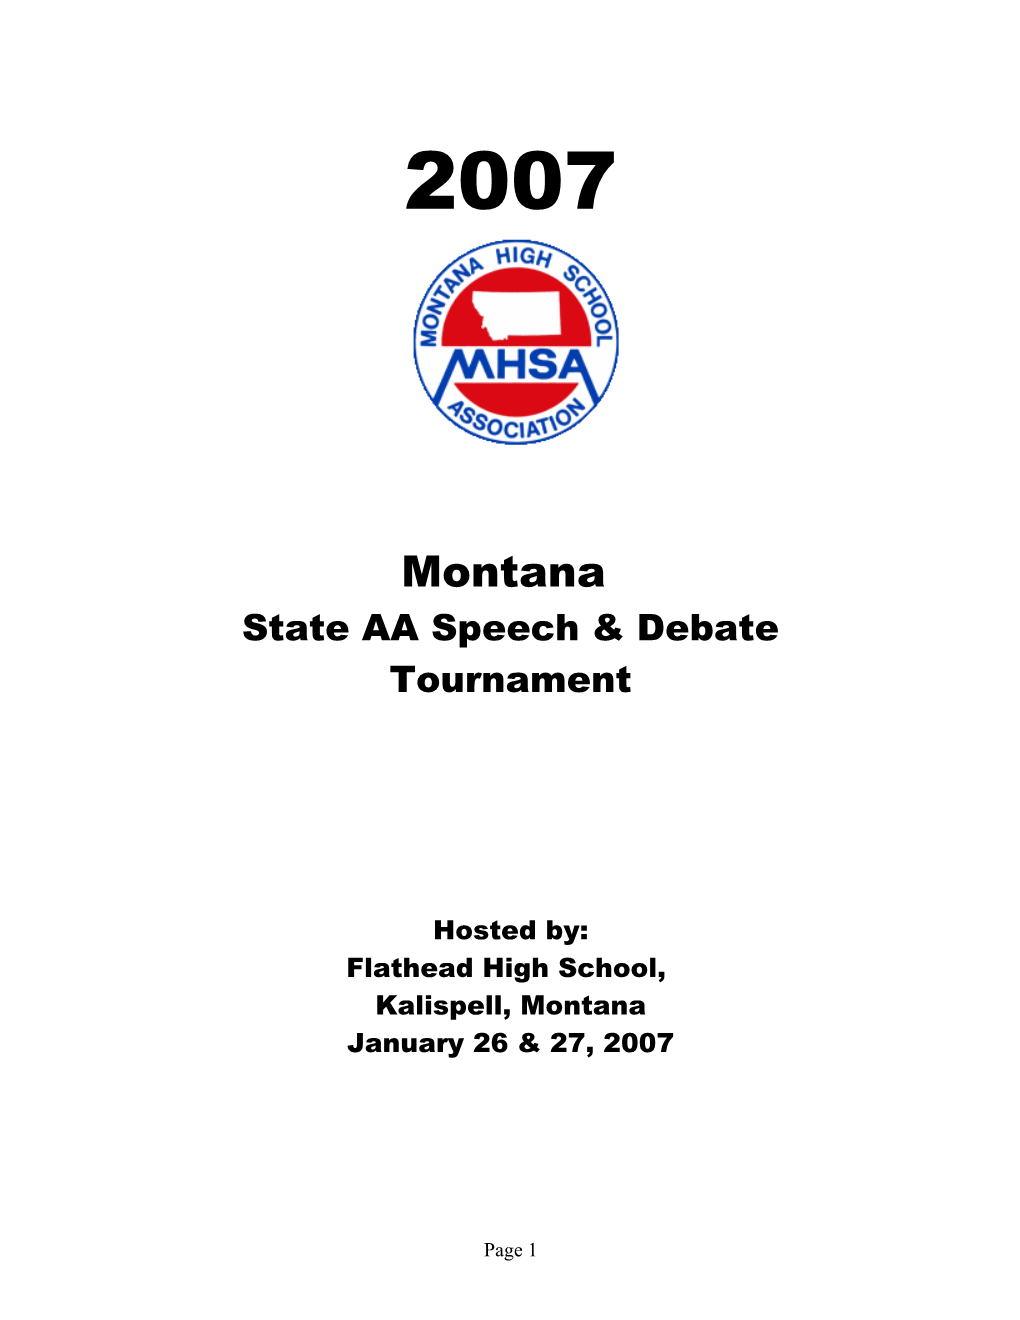 State AA Speech & Debate Tournament